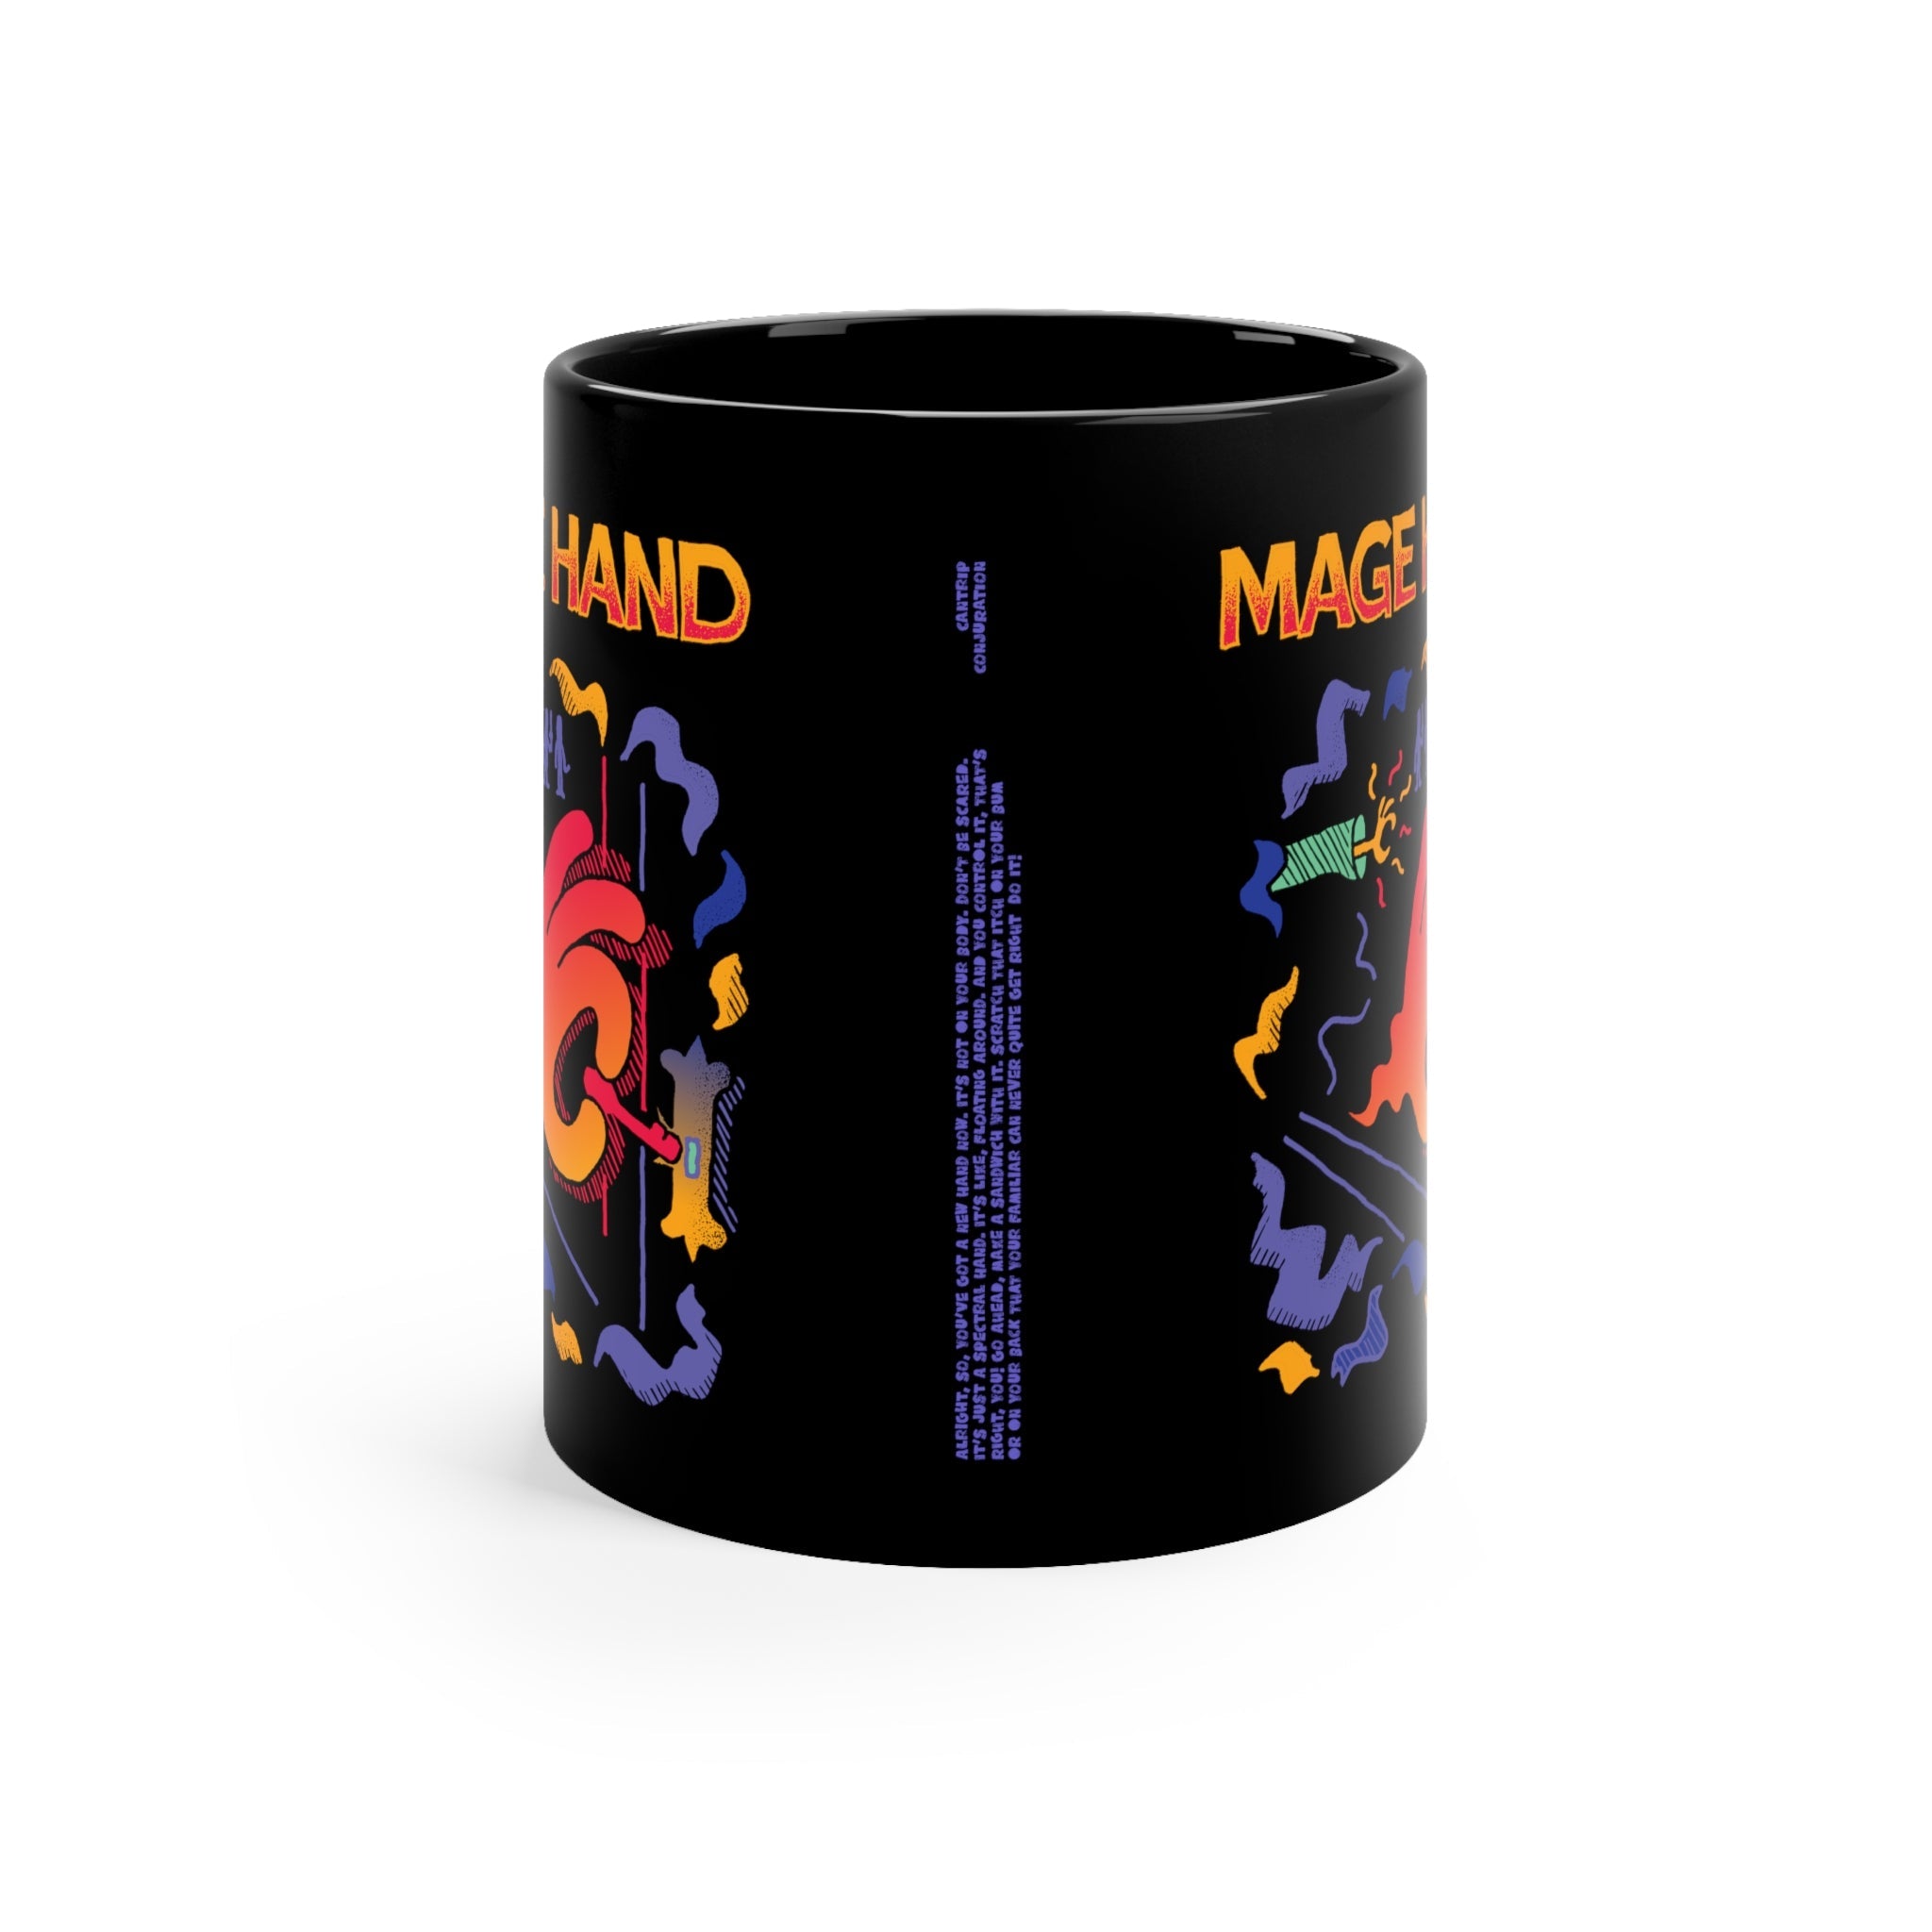 Mage Hand | Black Mug 11oz - Mug - Ace of Gnomes - 22020896280218381464